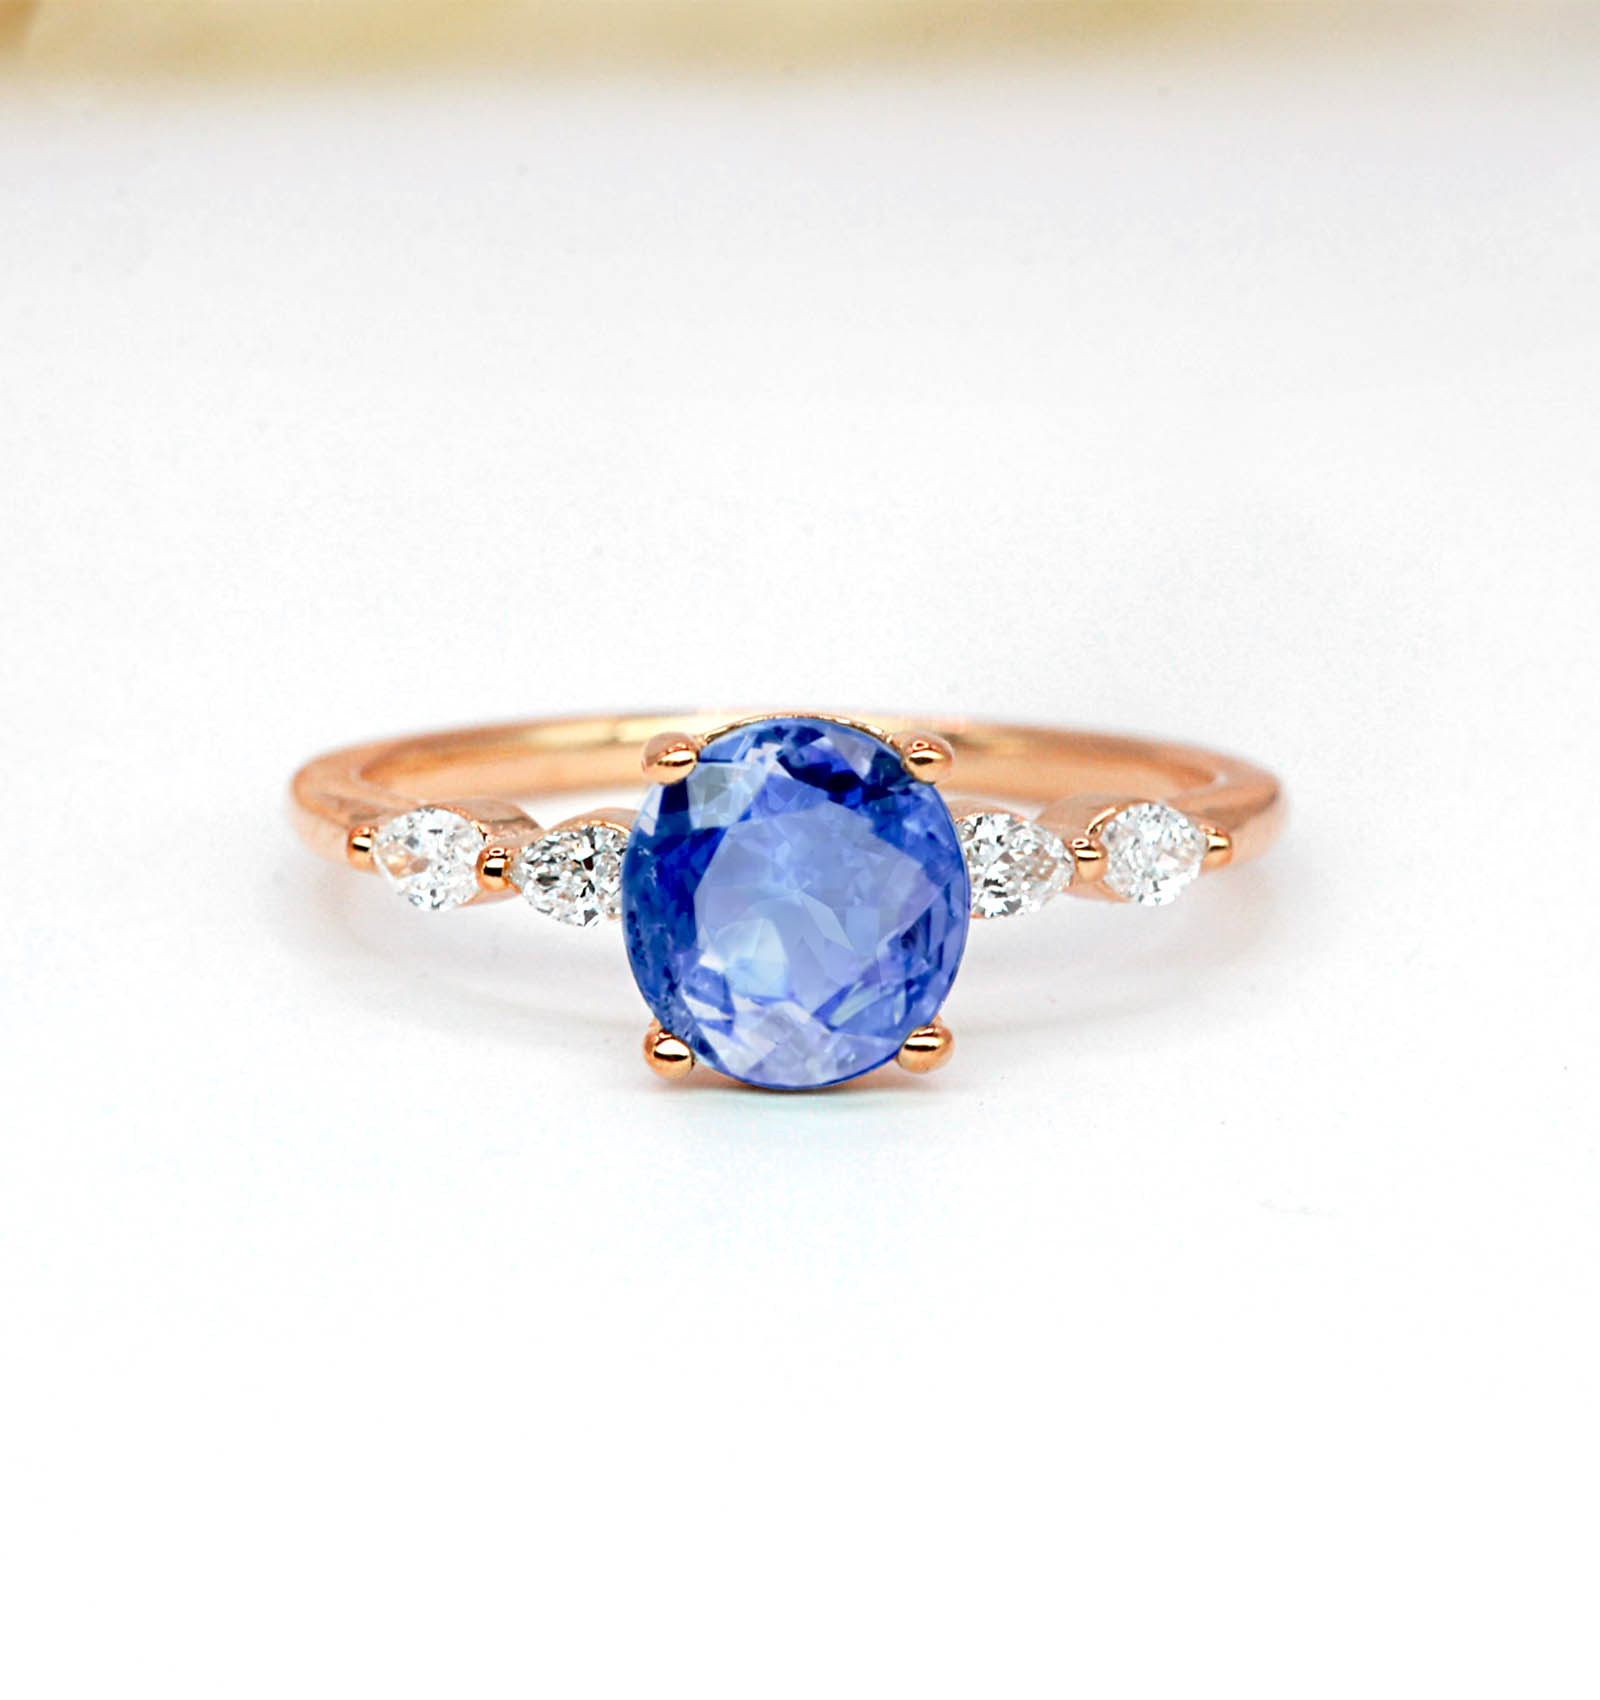 6mm blue sapphire vintage ring